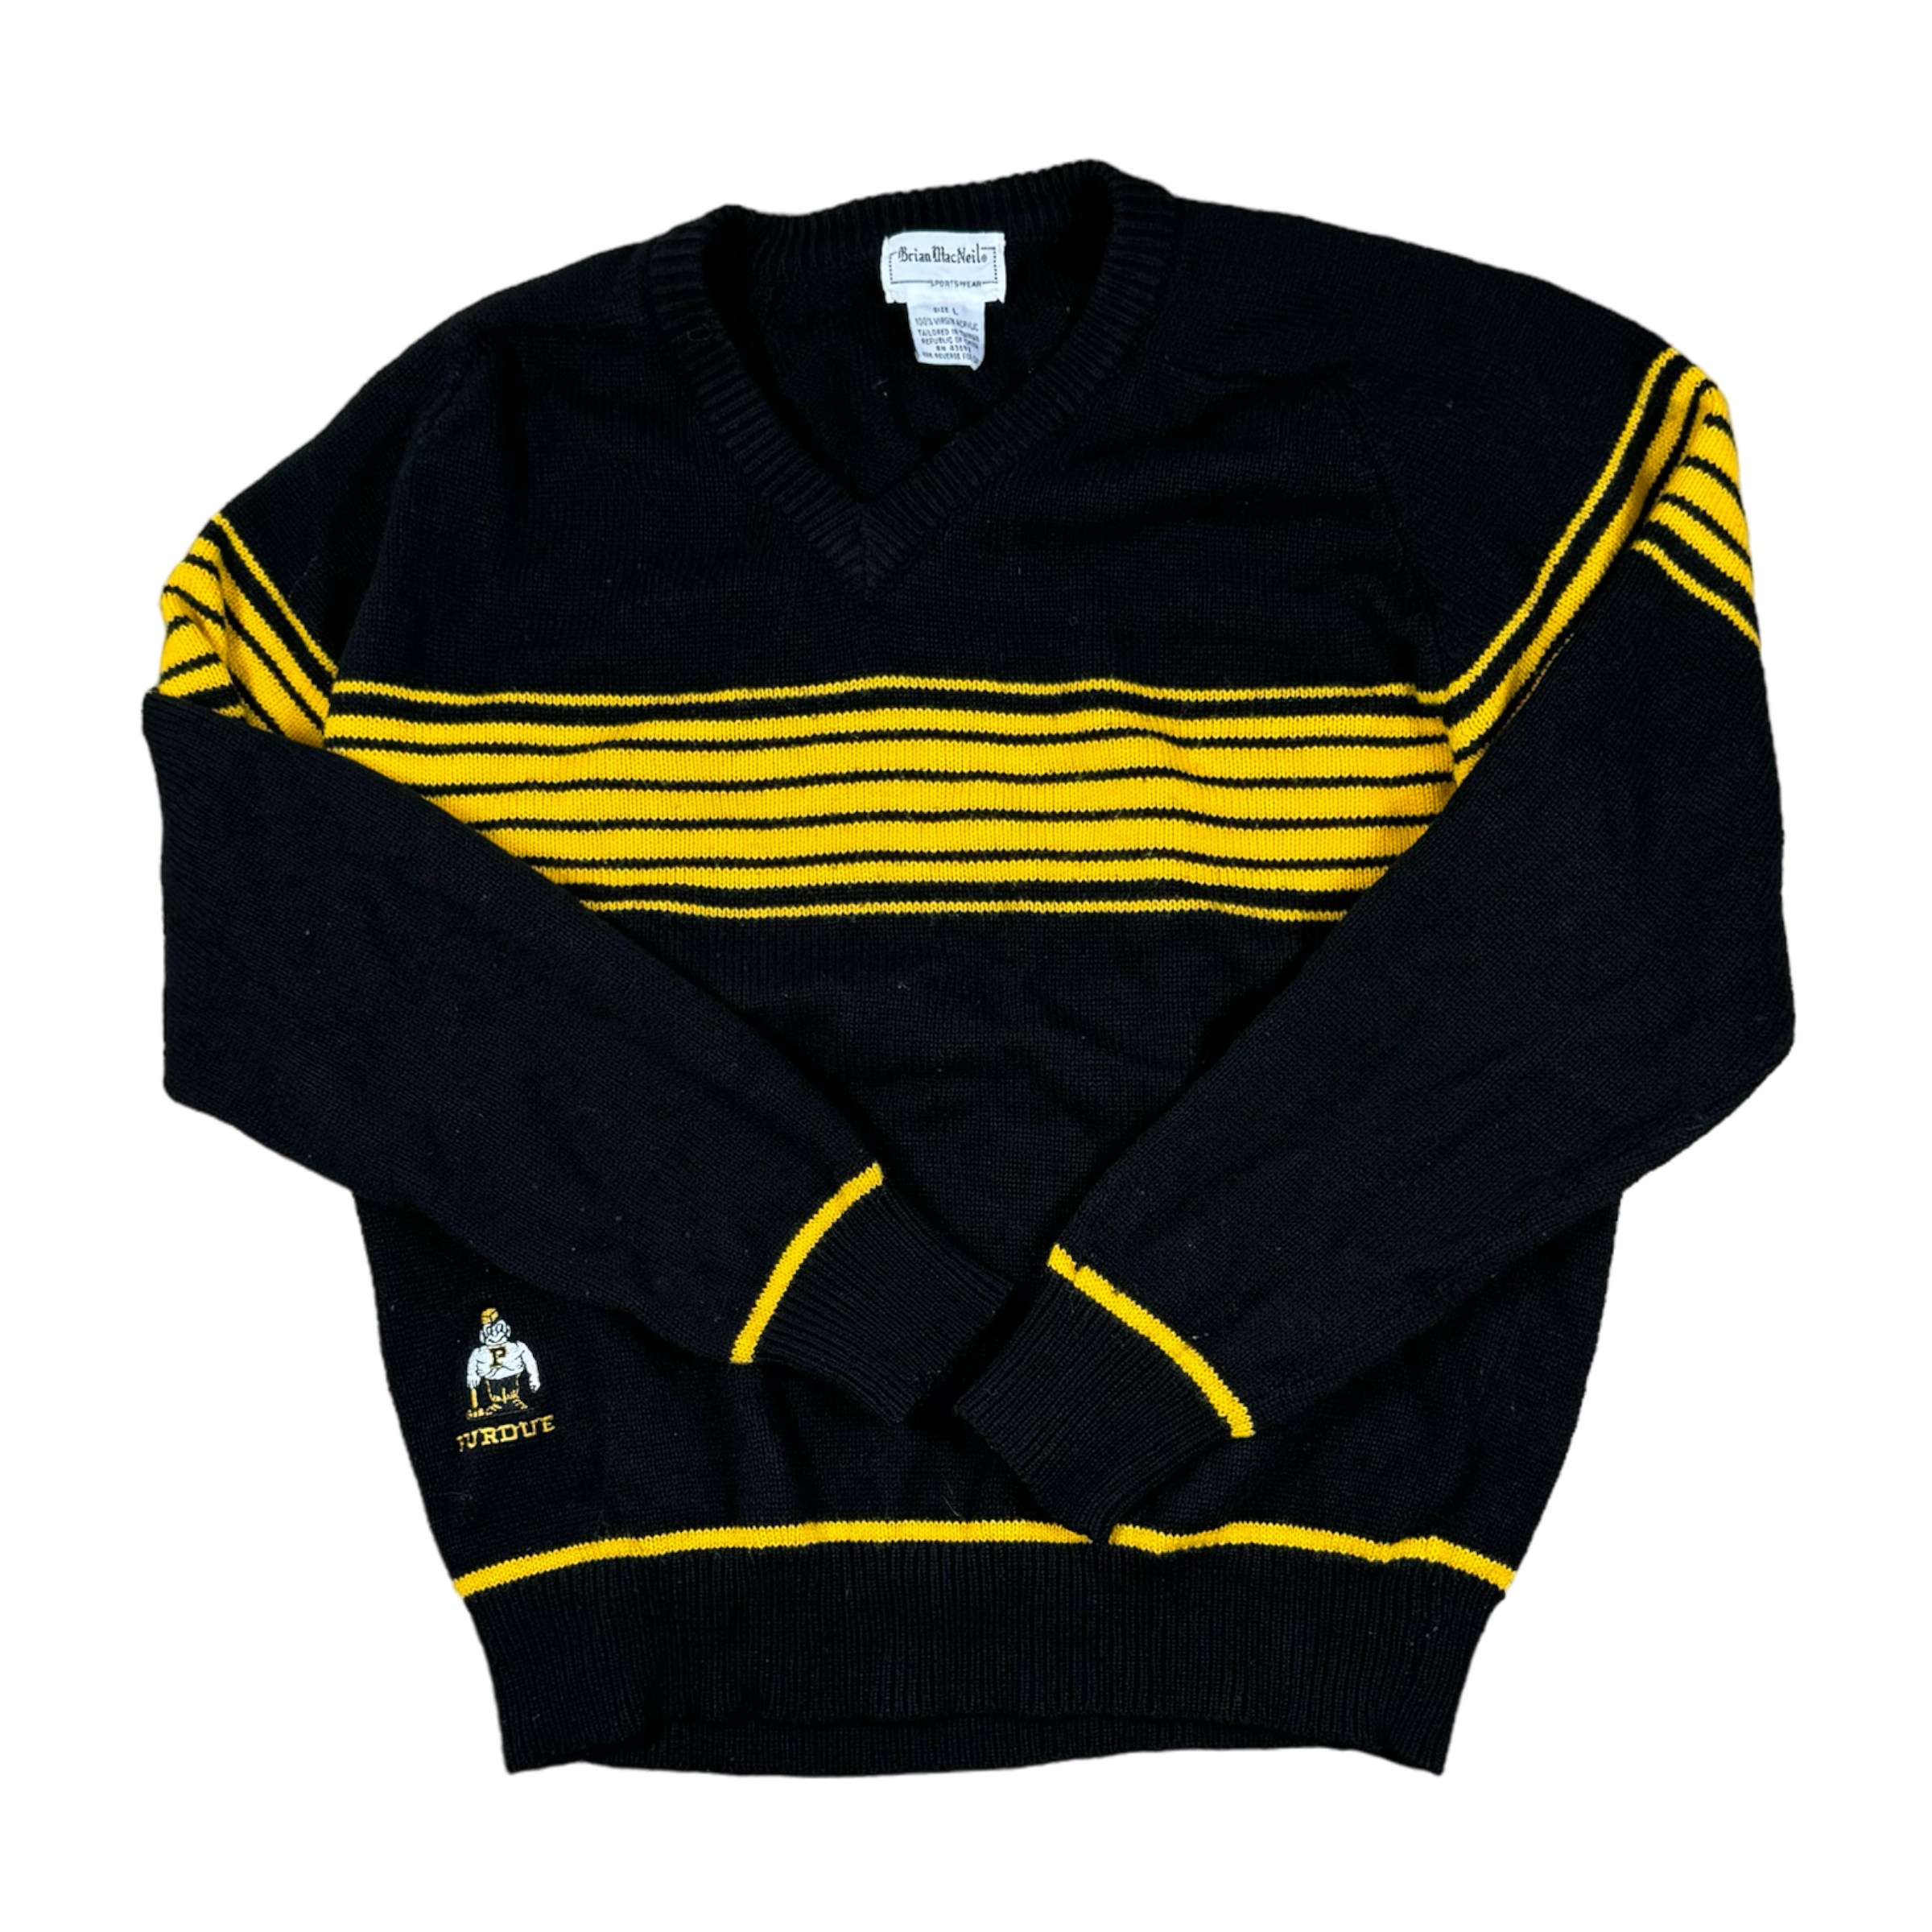 Black & Gold Sweater